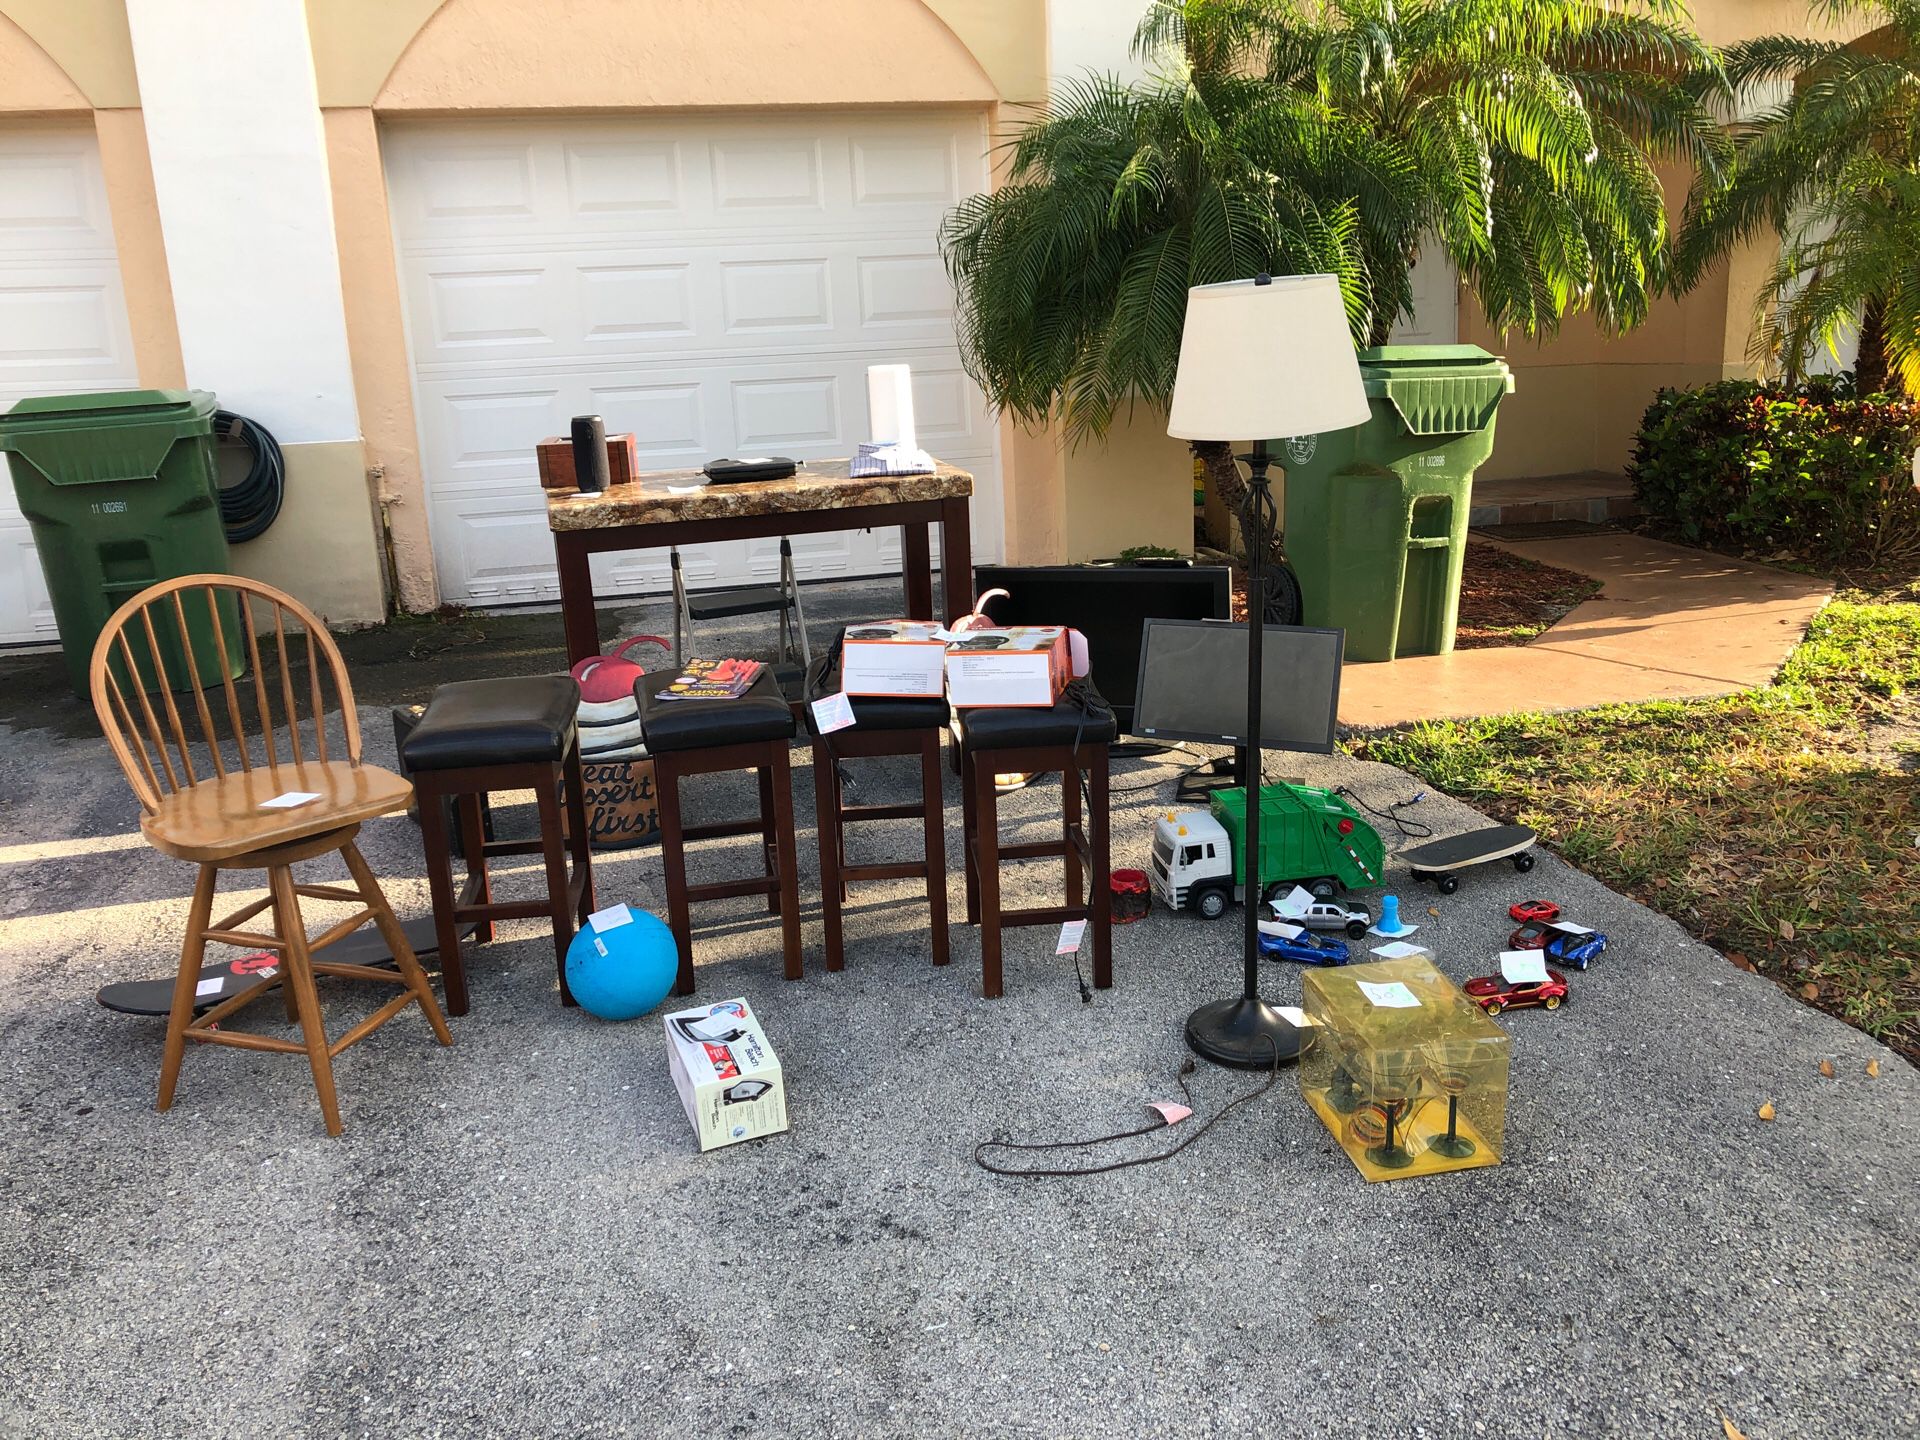 Yard Sale items table, jbl speaker, stools, tv, sign, toys, humidor, monitor